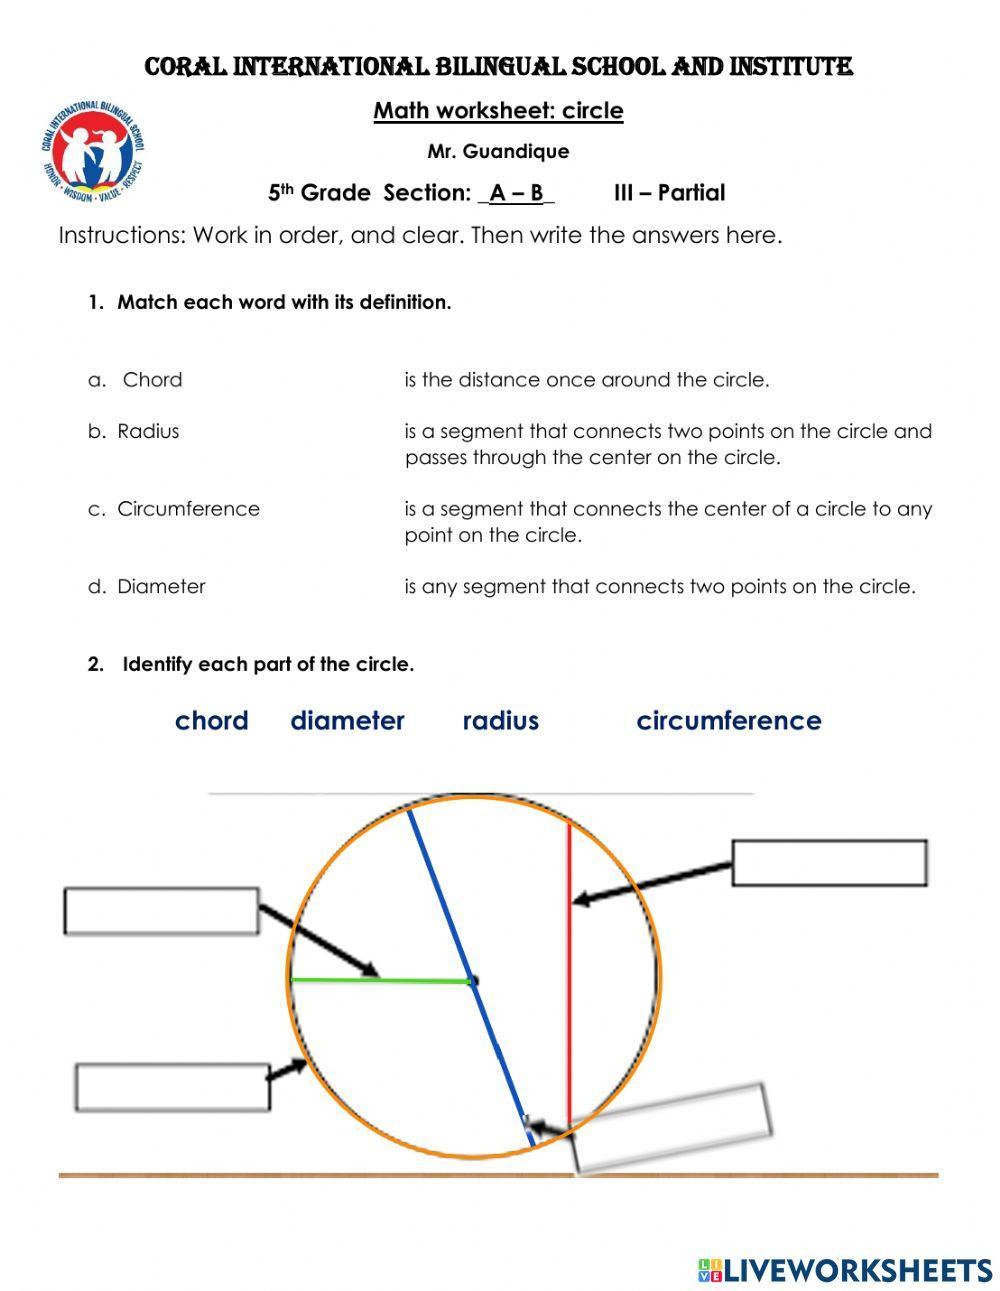 Circle and circumference